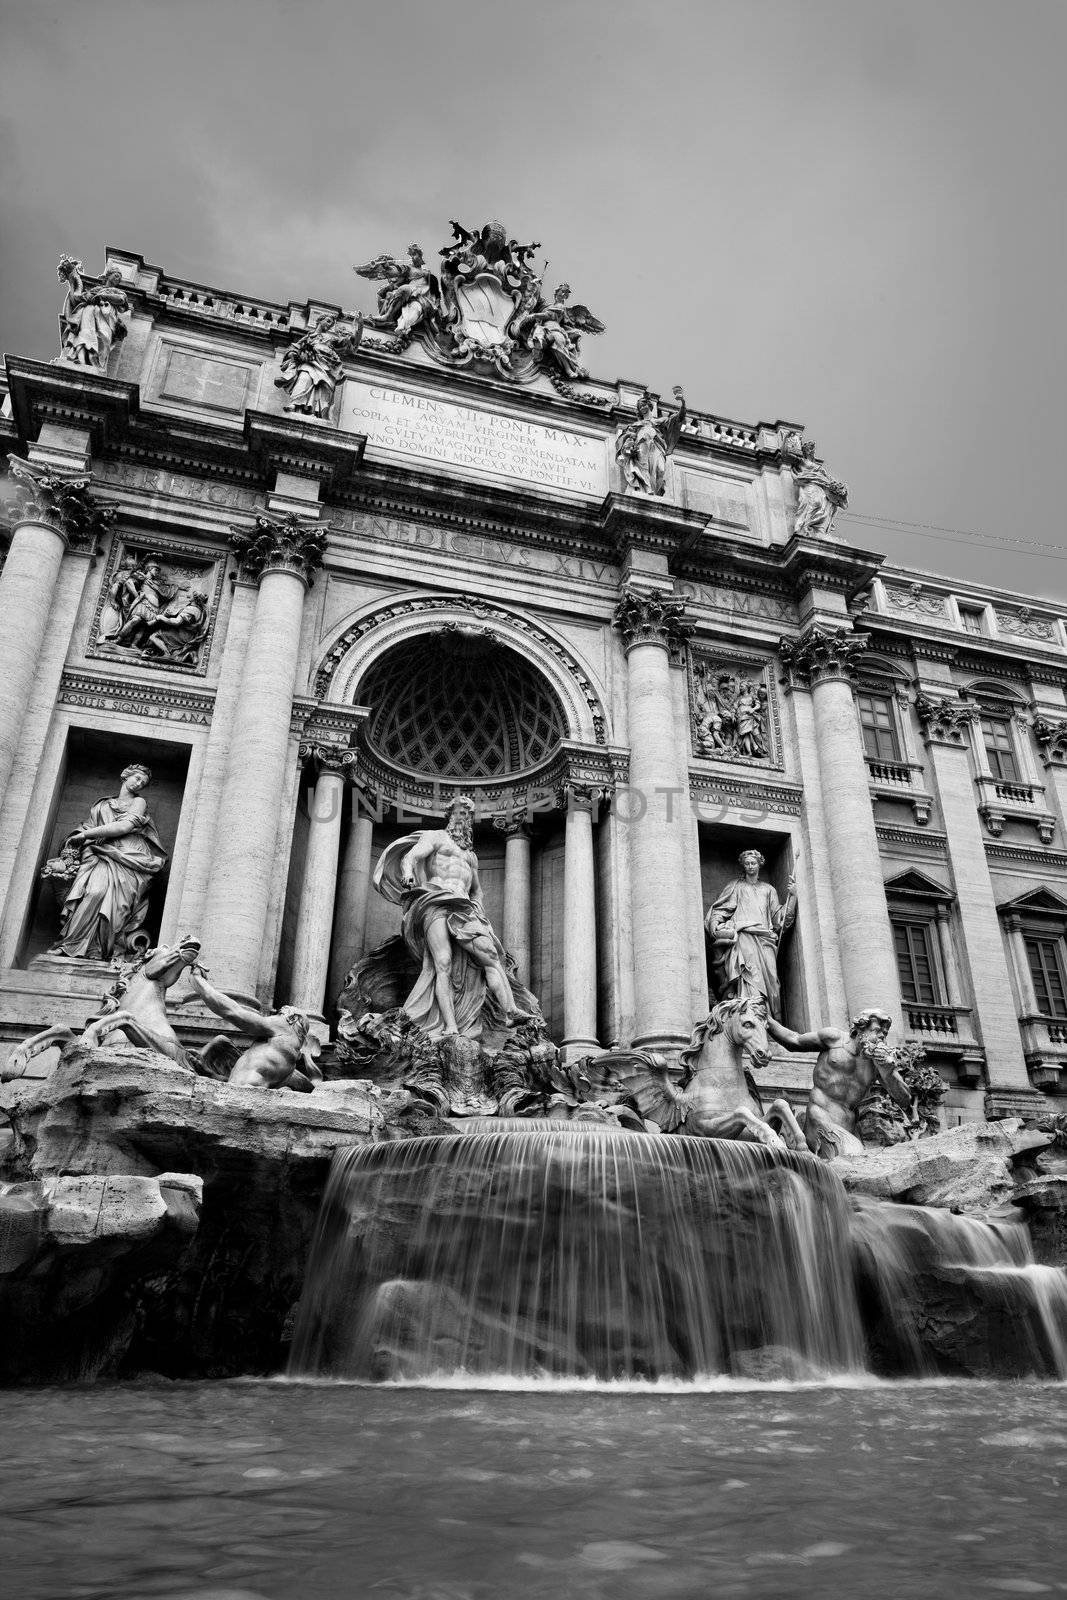 Fontana di Trevi - the famous Trevi fountain in Rome, Italy